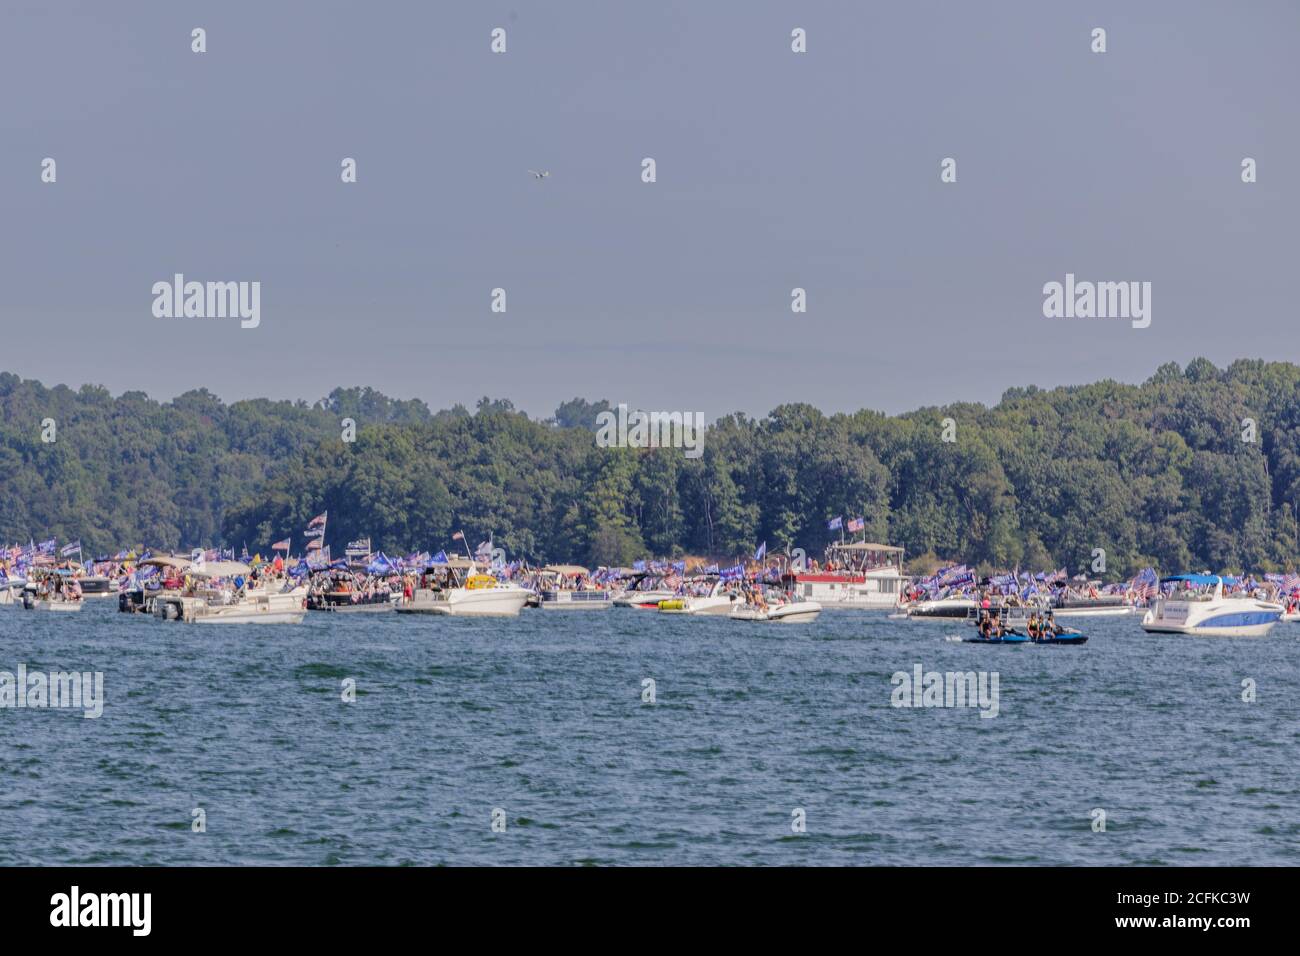 Buford, Georgia, United States of America - September 06, 2020: Trump boat parade at Lake Lanier. Stock Photo